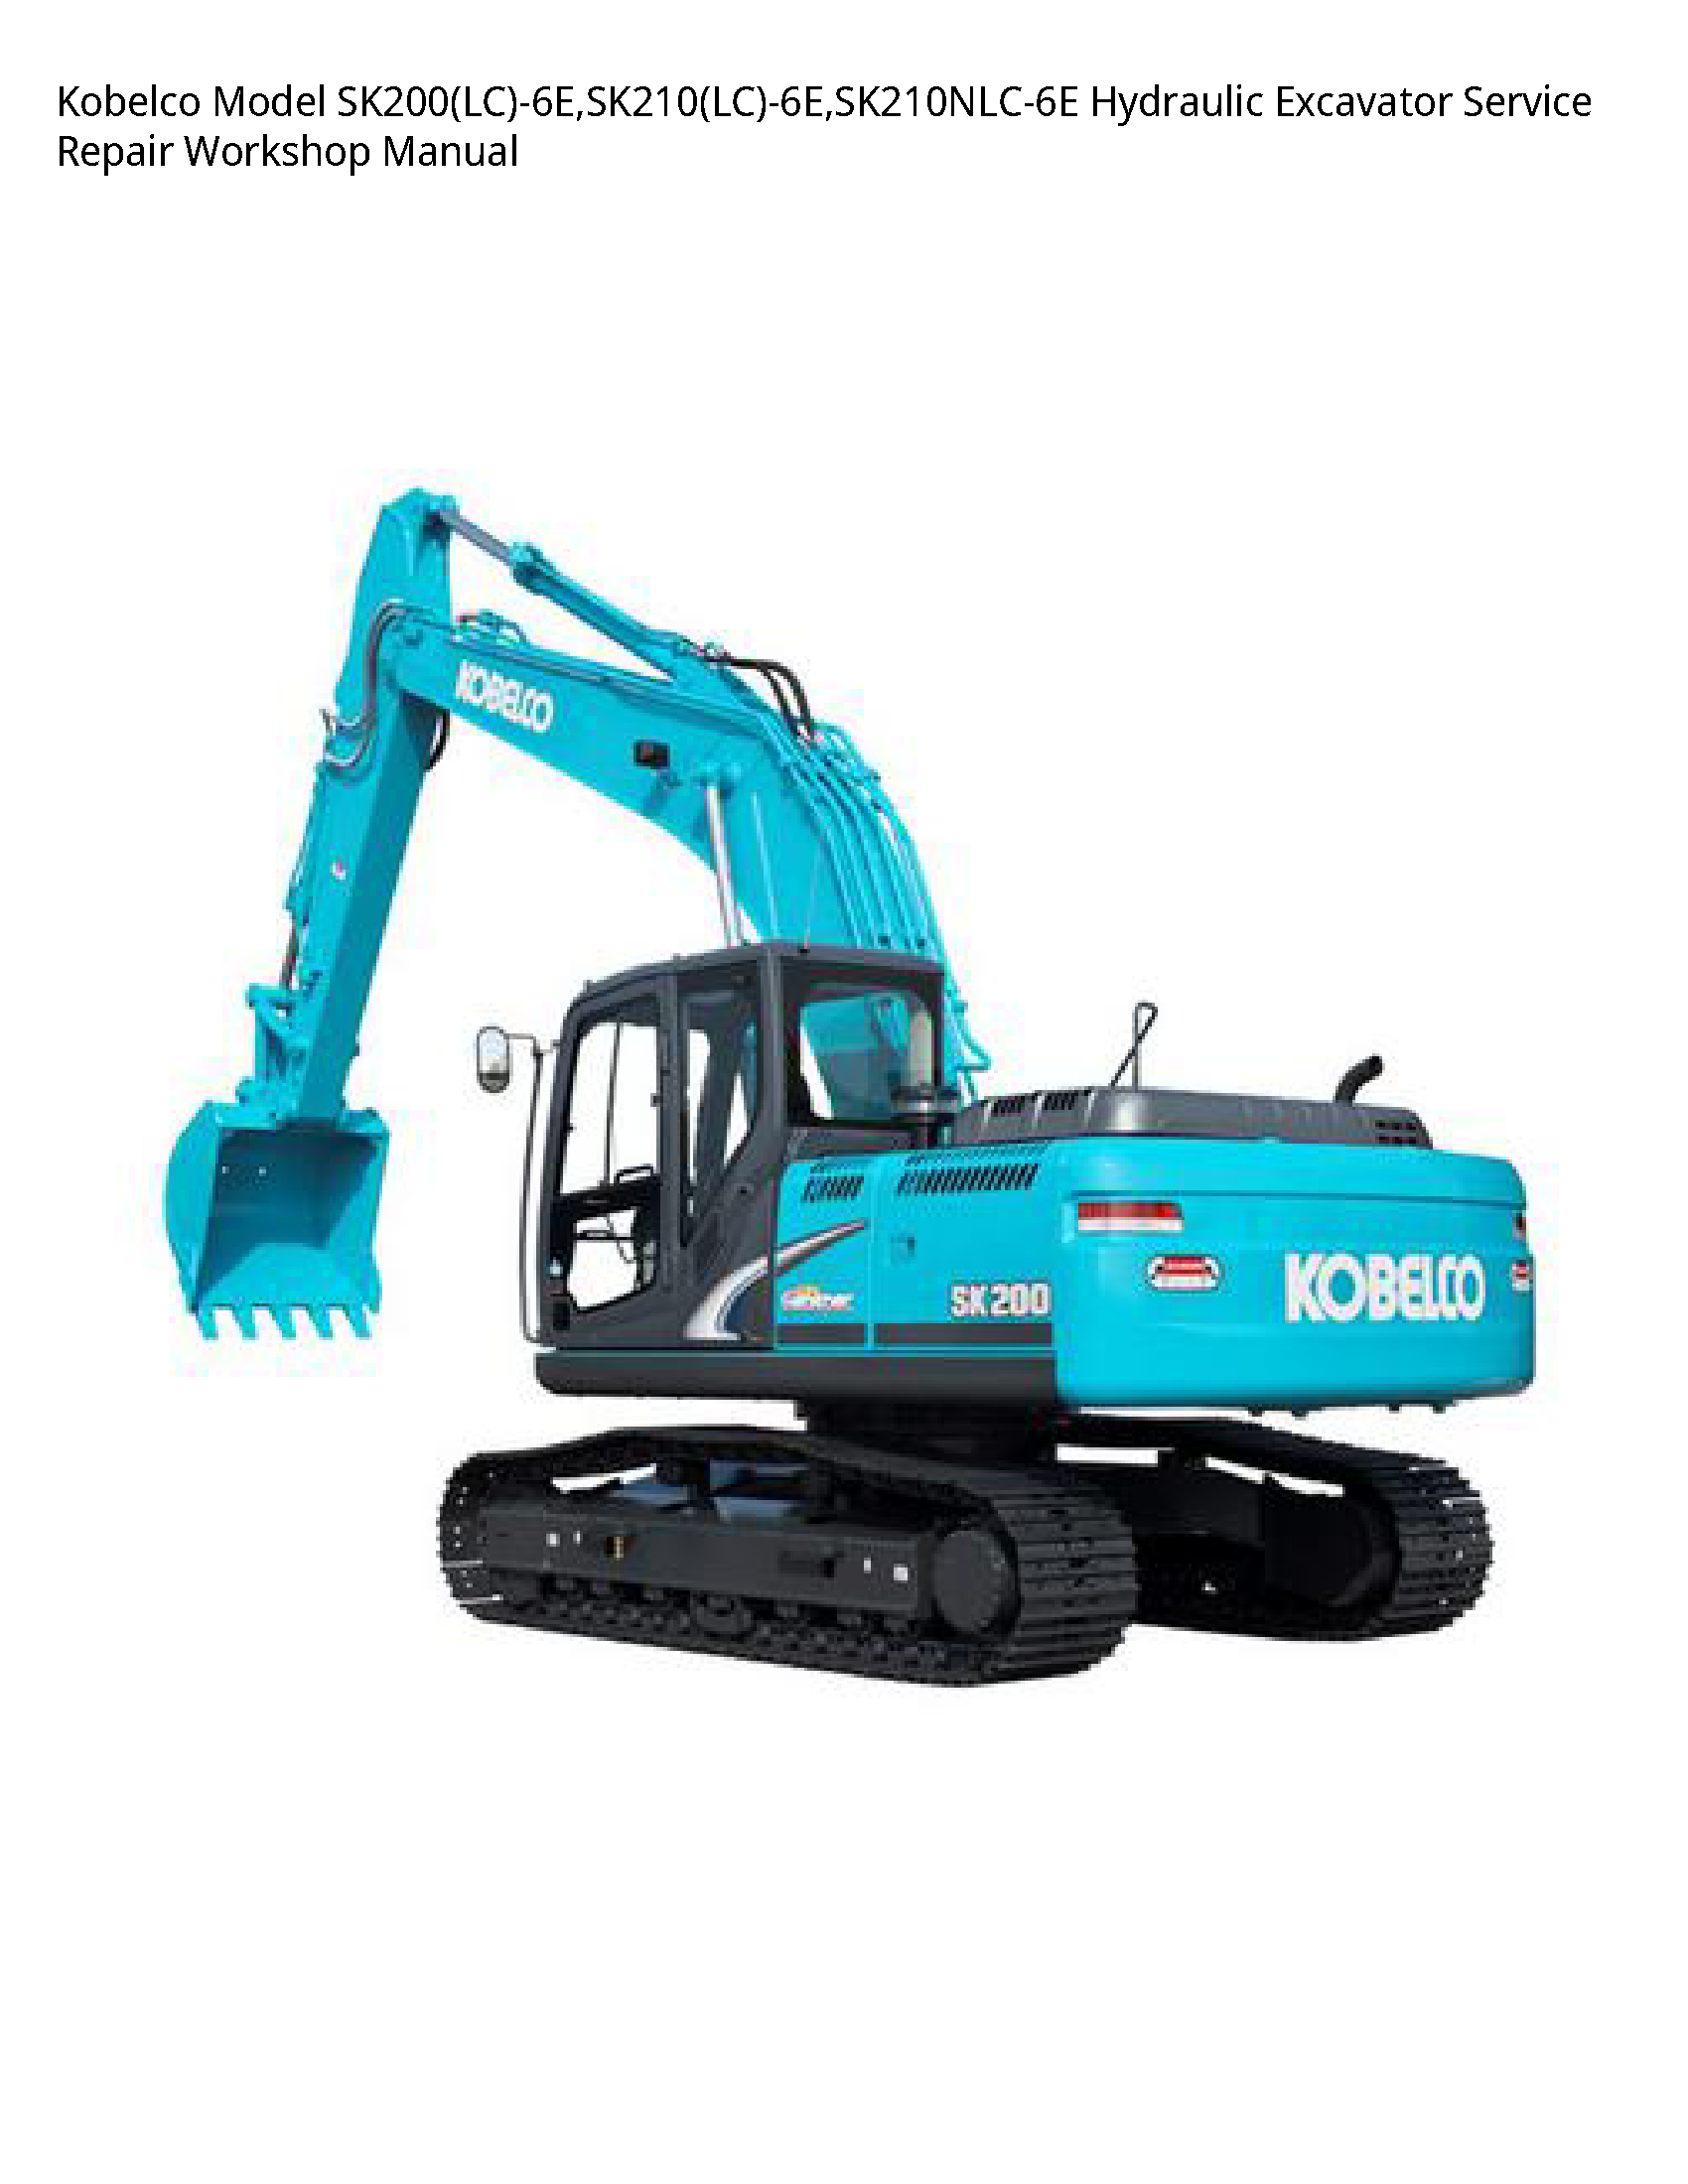 Kobelco SK200LC-6E Model Hydraulic Excavator manual